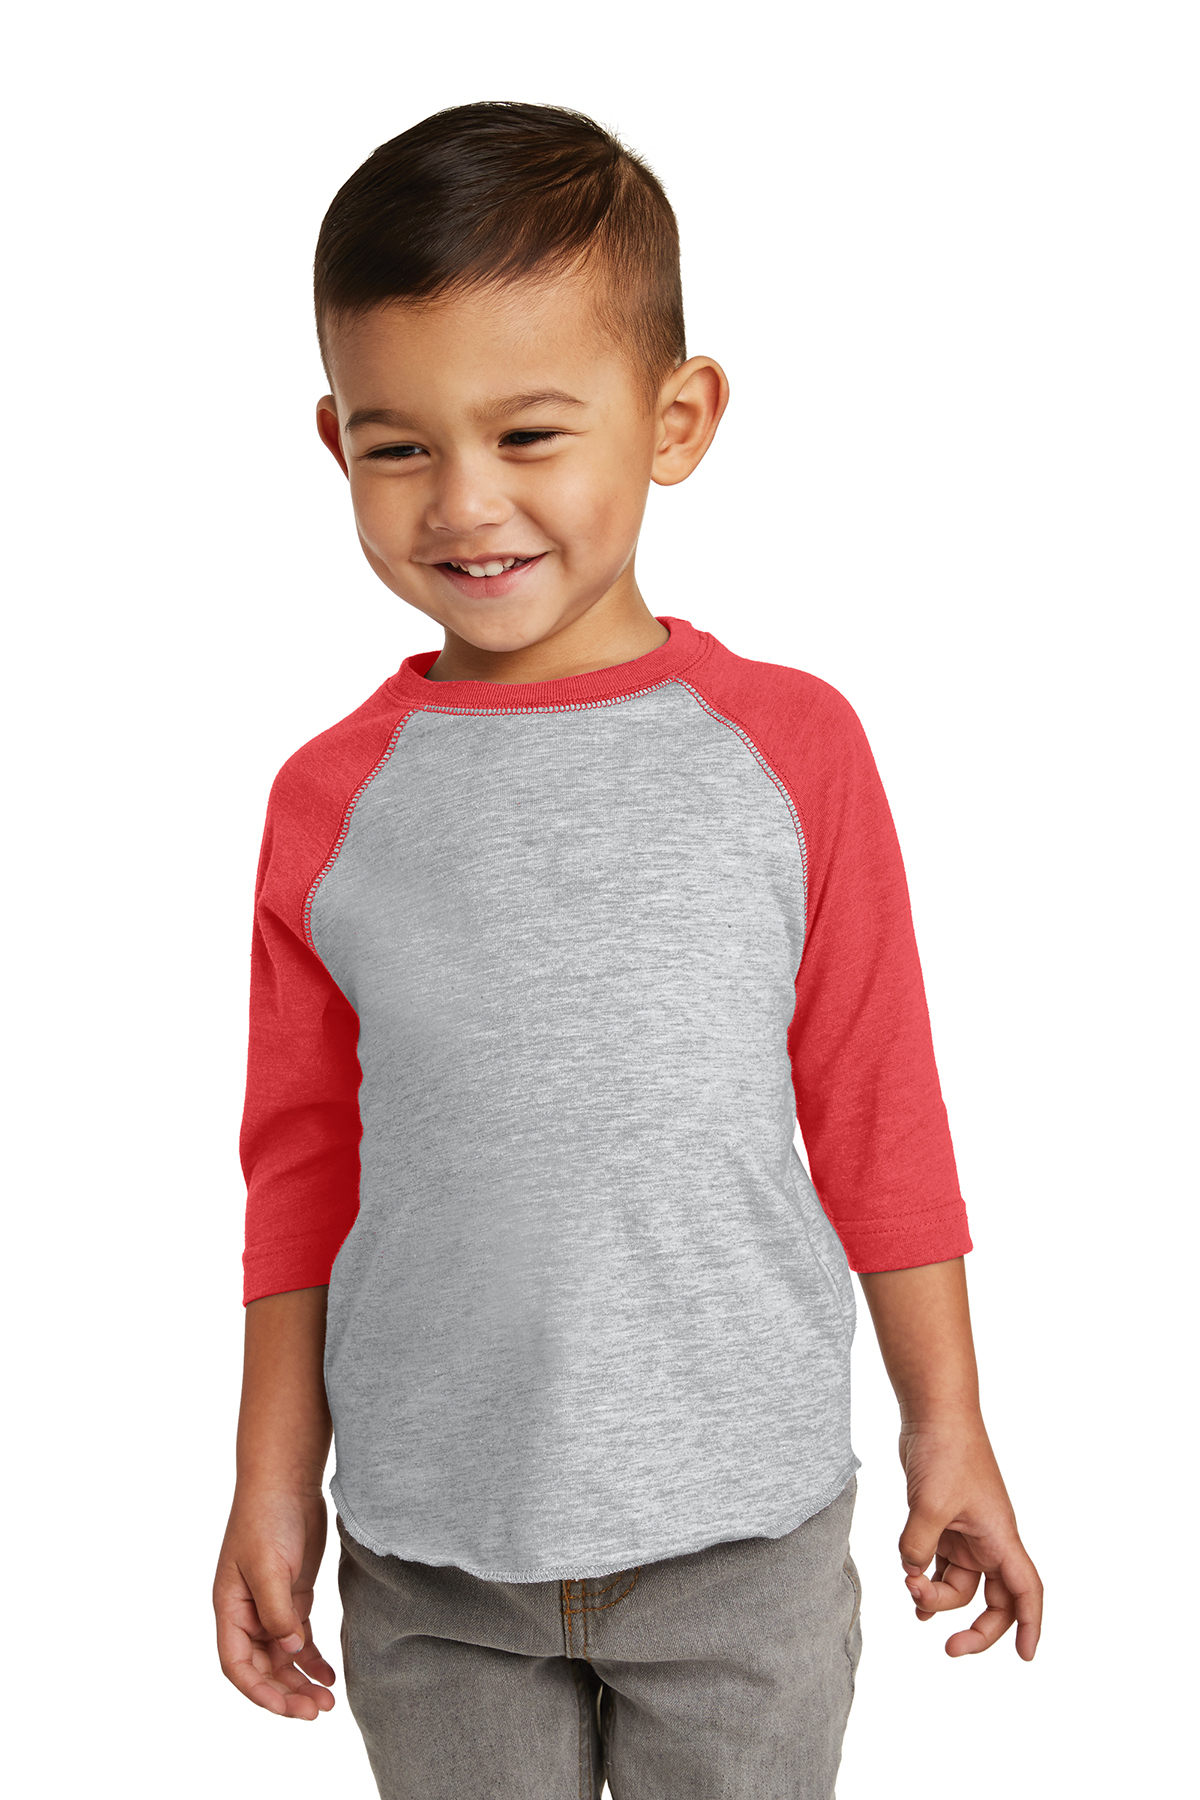 Rabbit Skins Toddler Fine Jersey Three-Quarter Sleeve Baseball T-Shirt 3330 NEW 